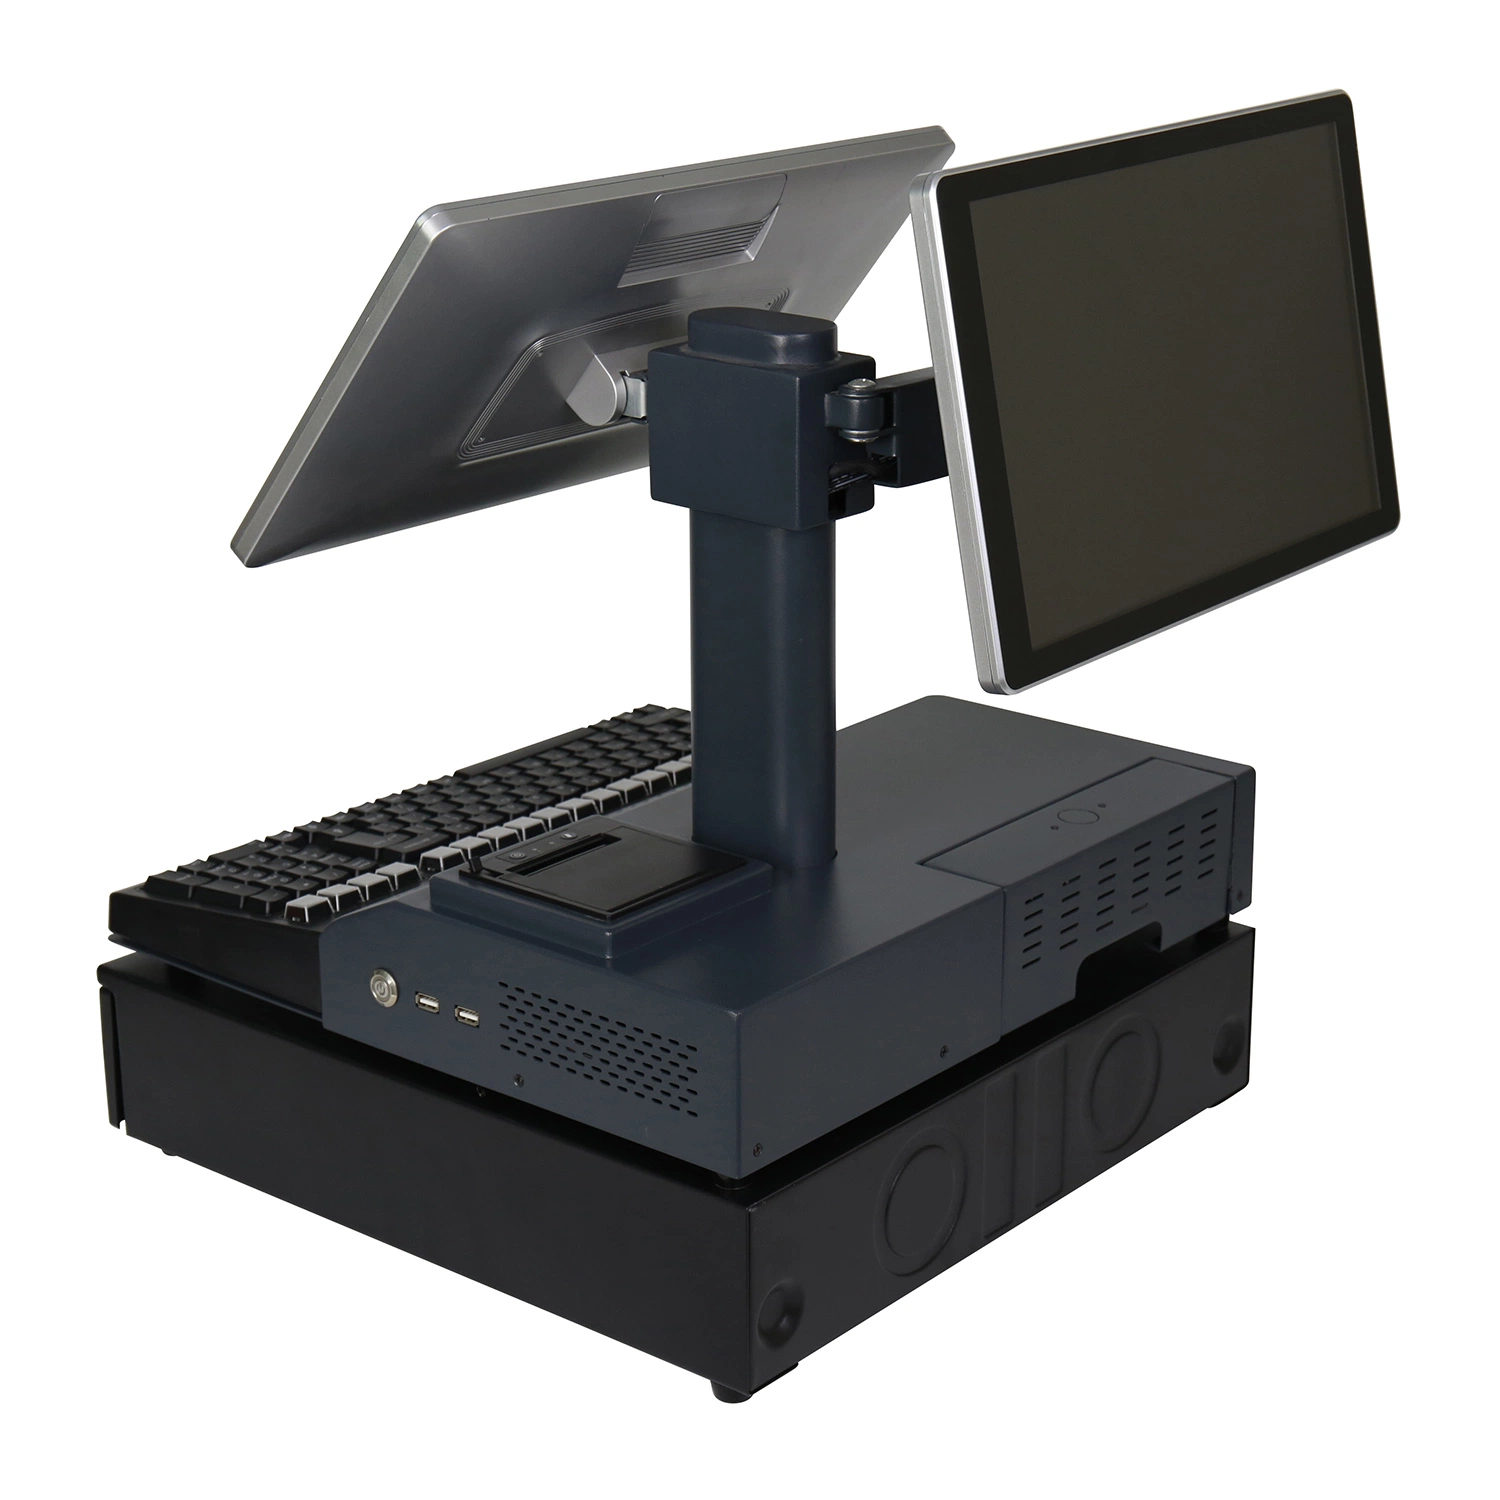 Dual Screen Cash Register Machine POS Terminal with Built-in 58mm Thermal Printer